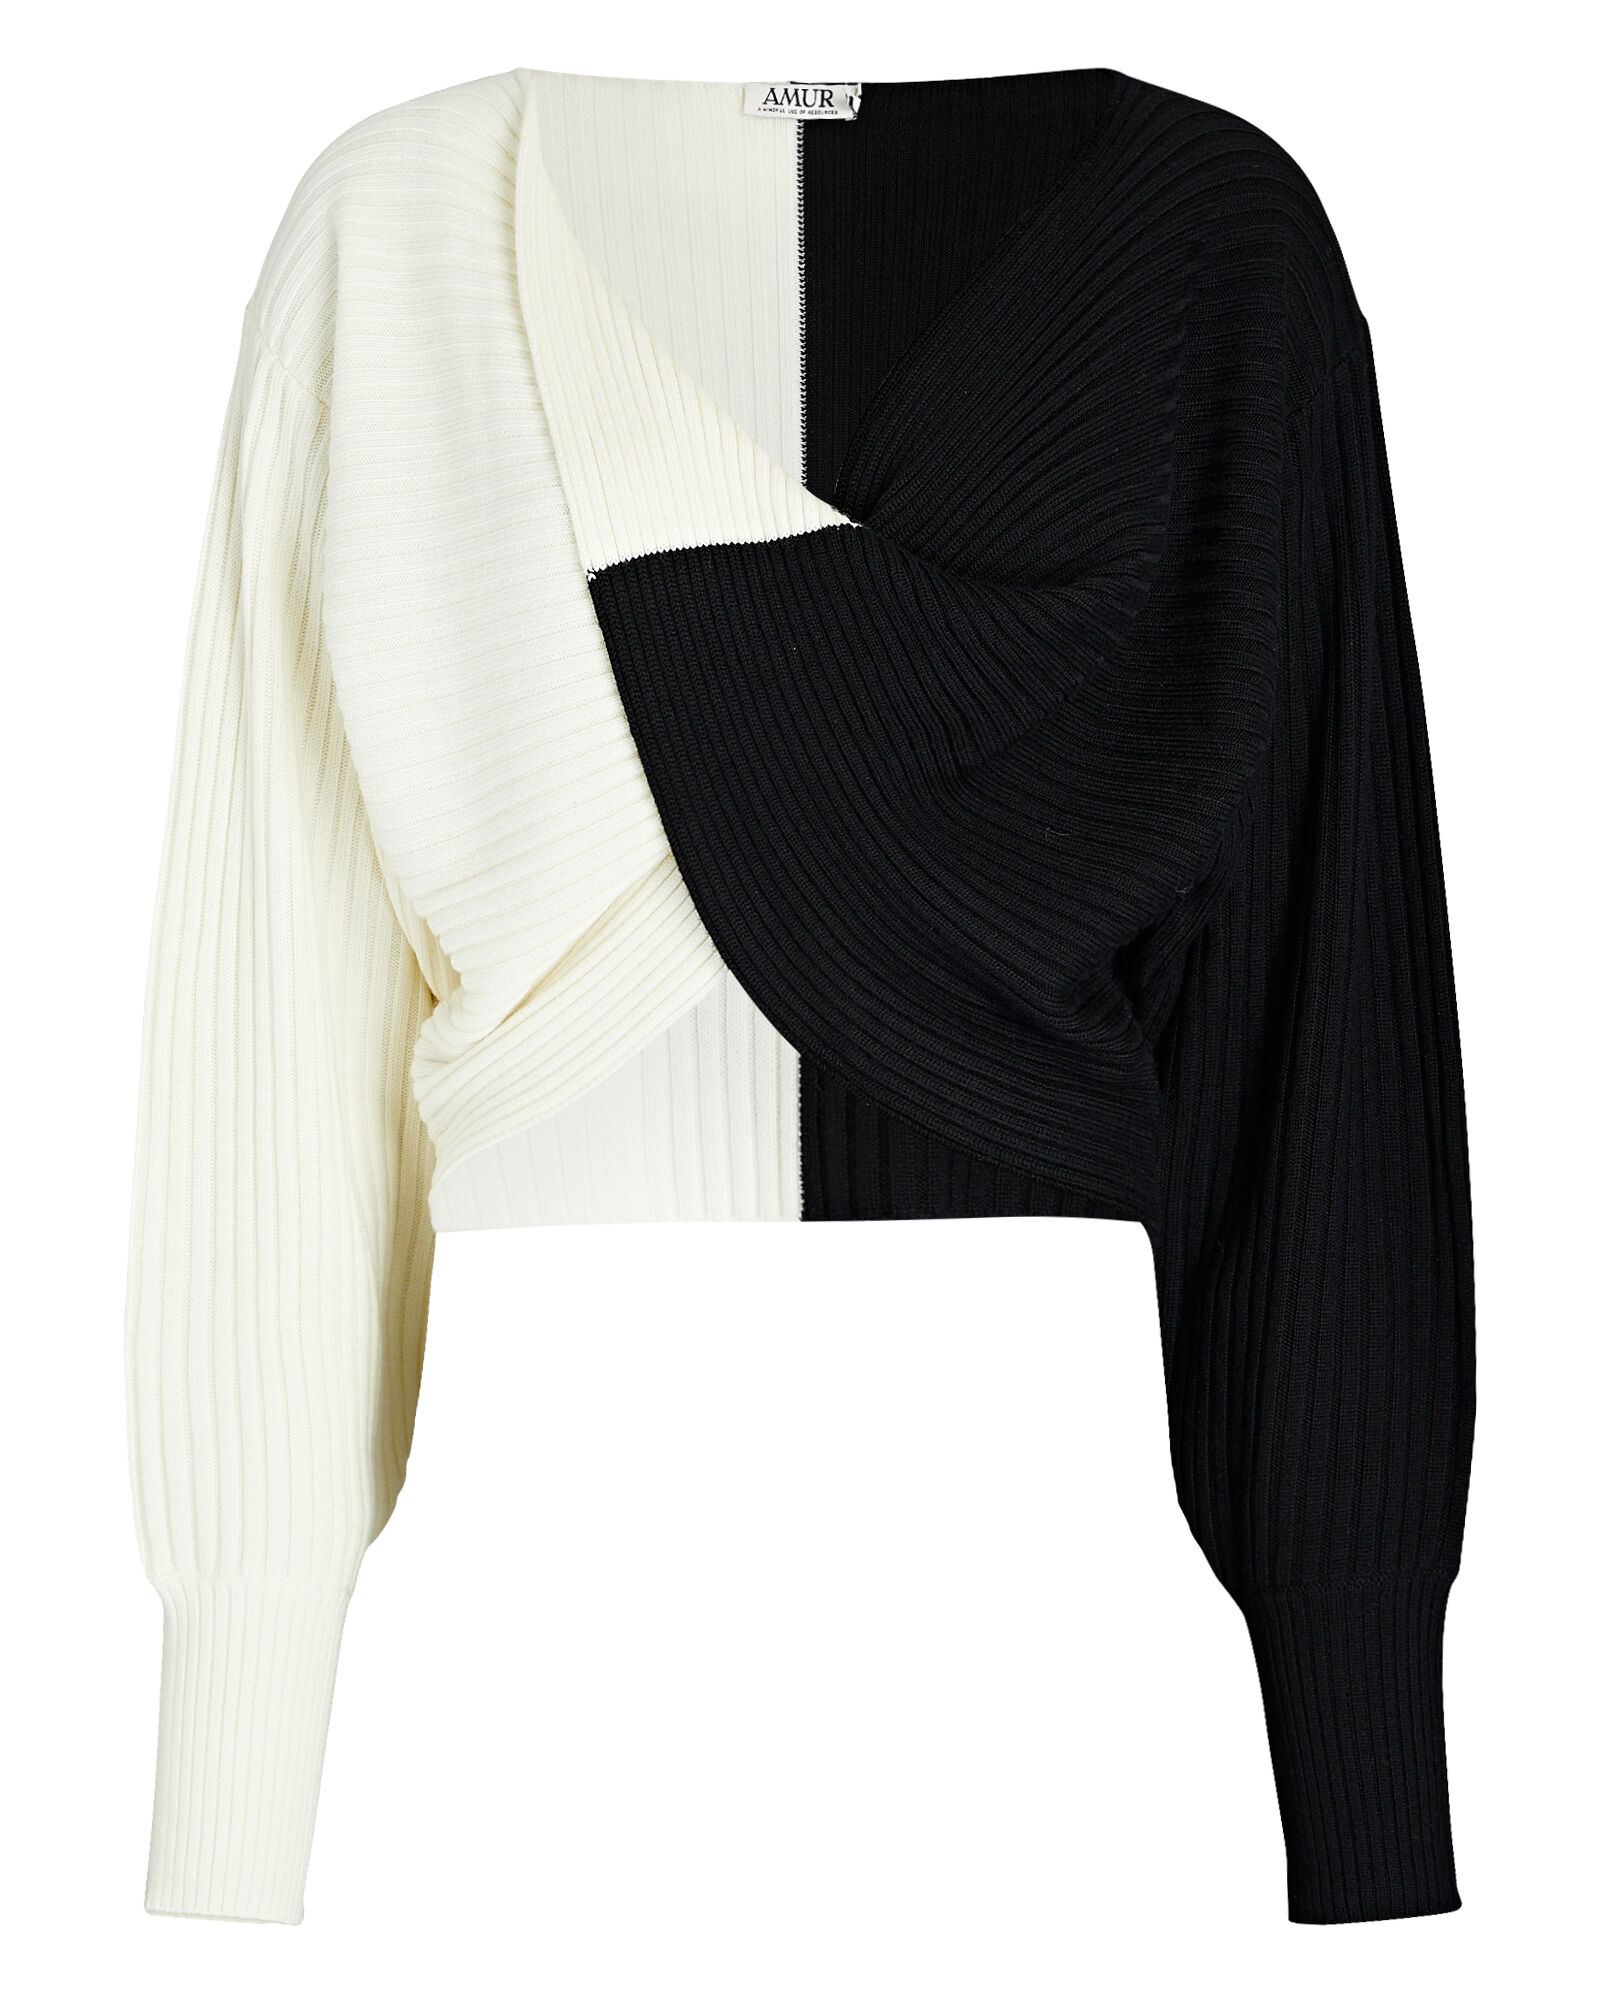 AMUR Cruz Two-Toned Rib Knit Sweater | INTERMIX®